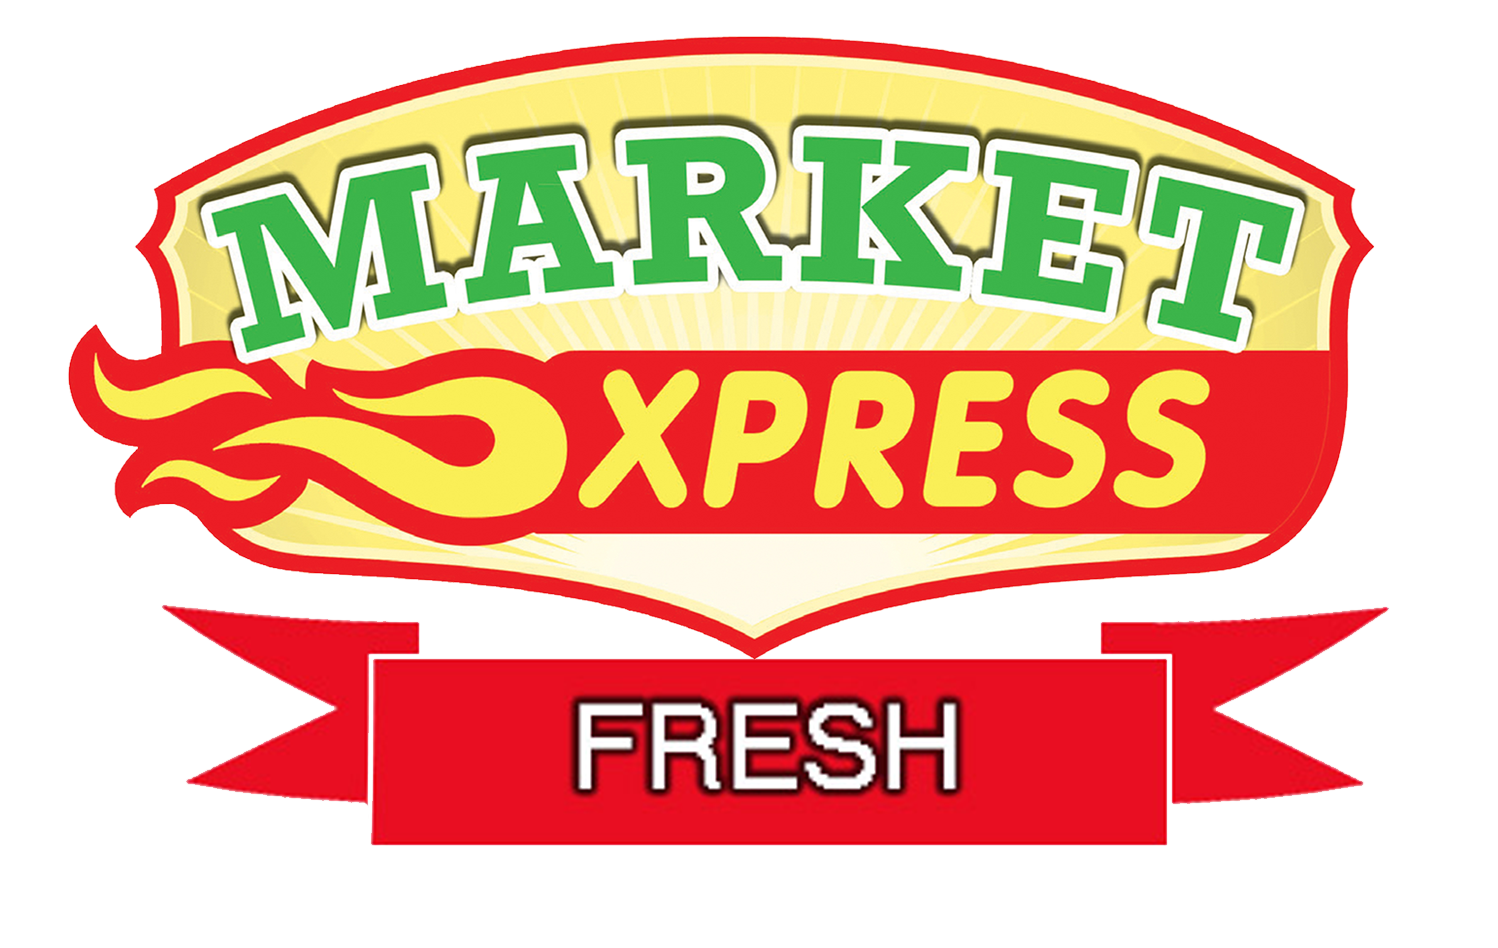 Market Xpress